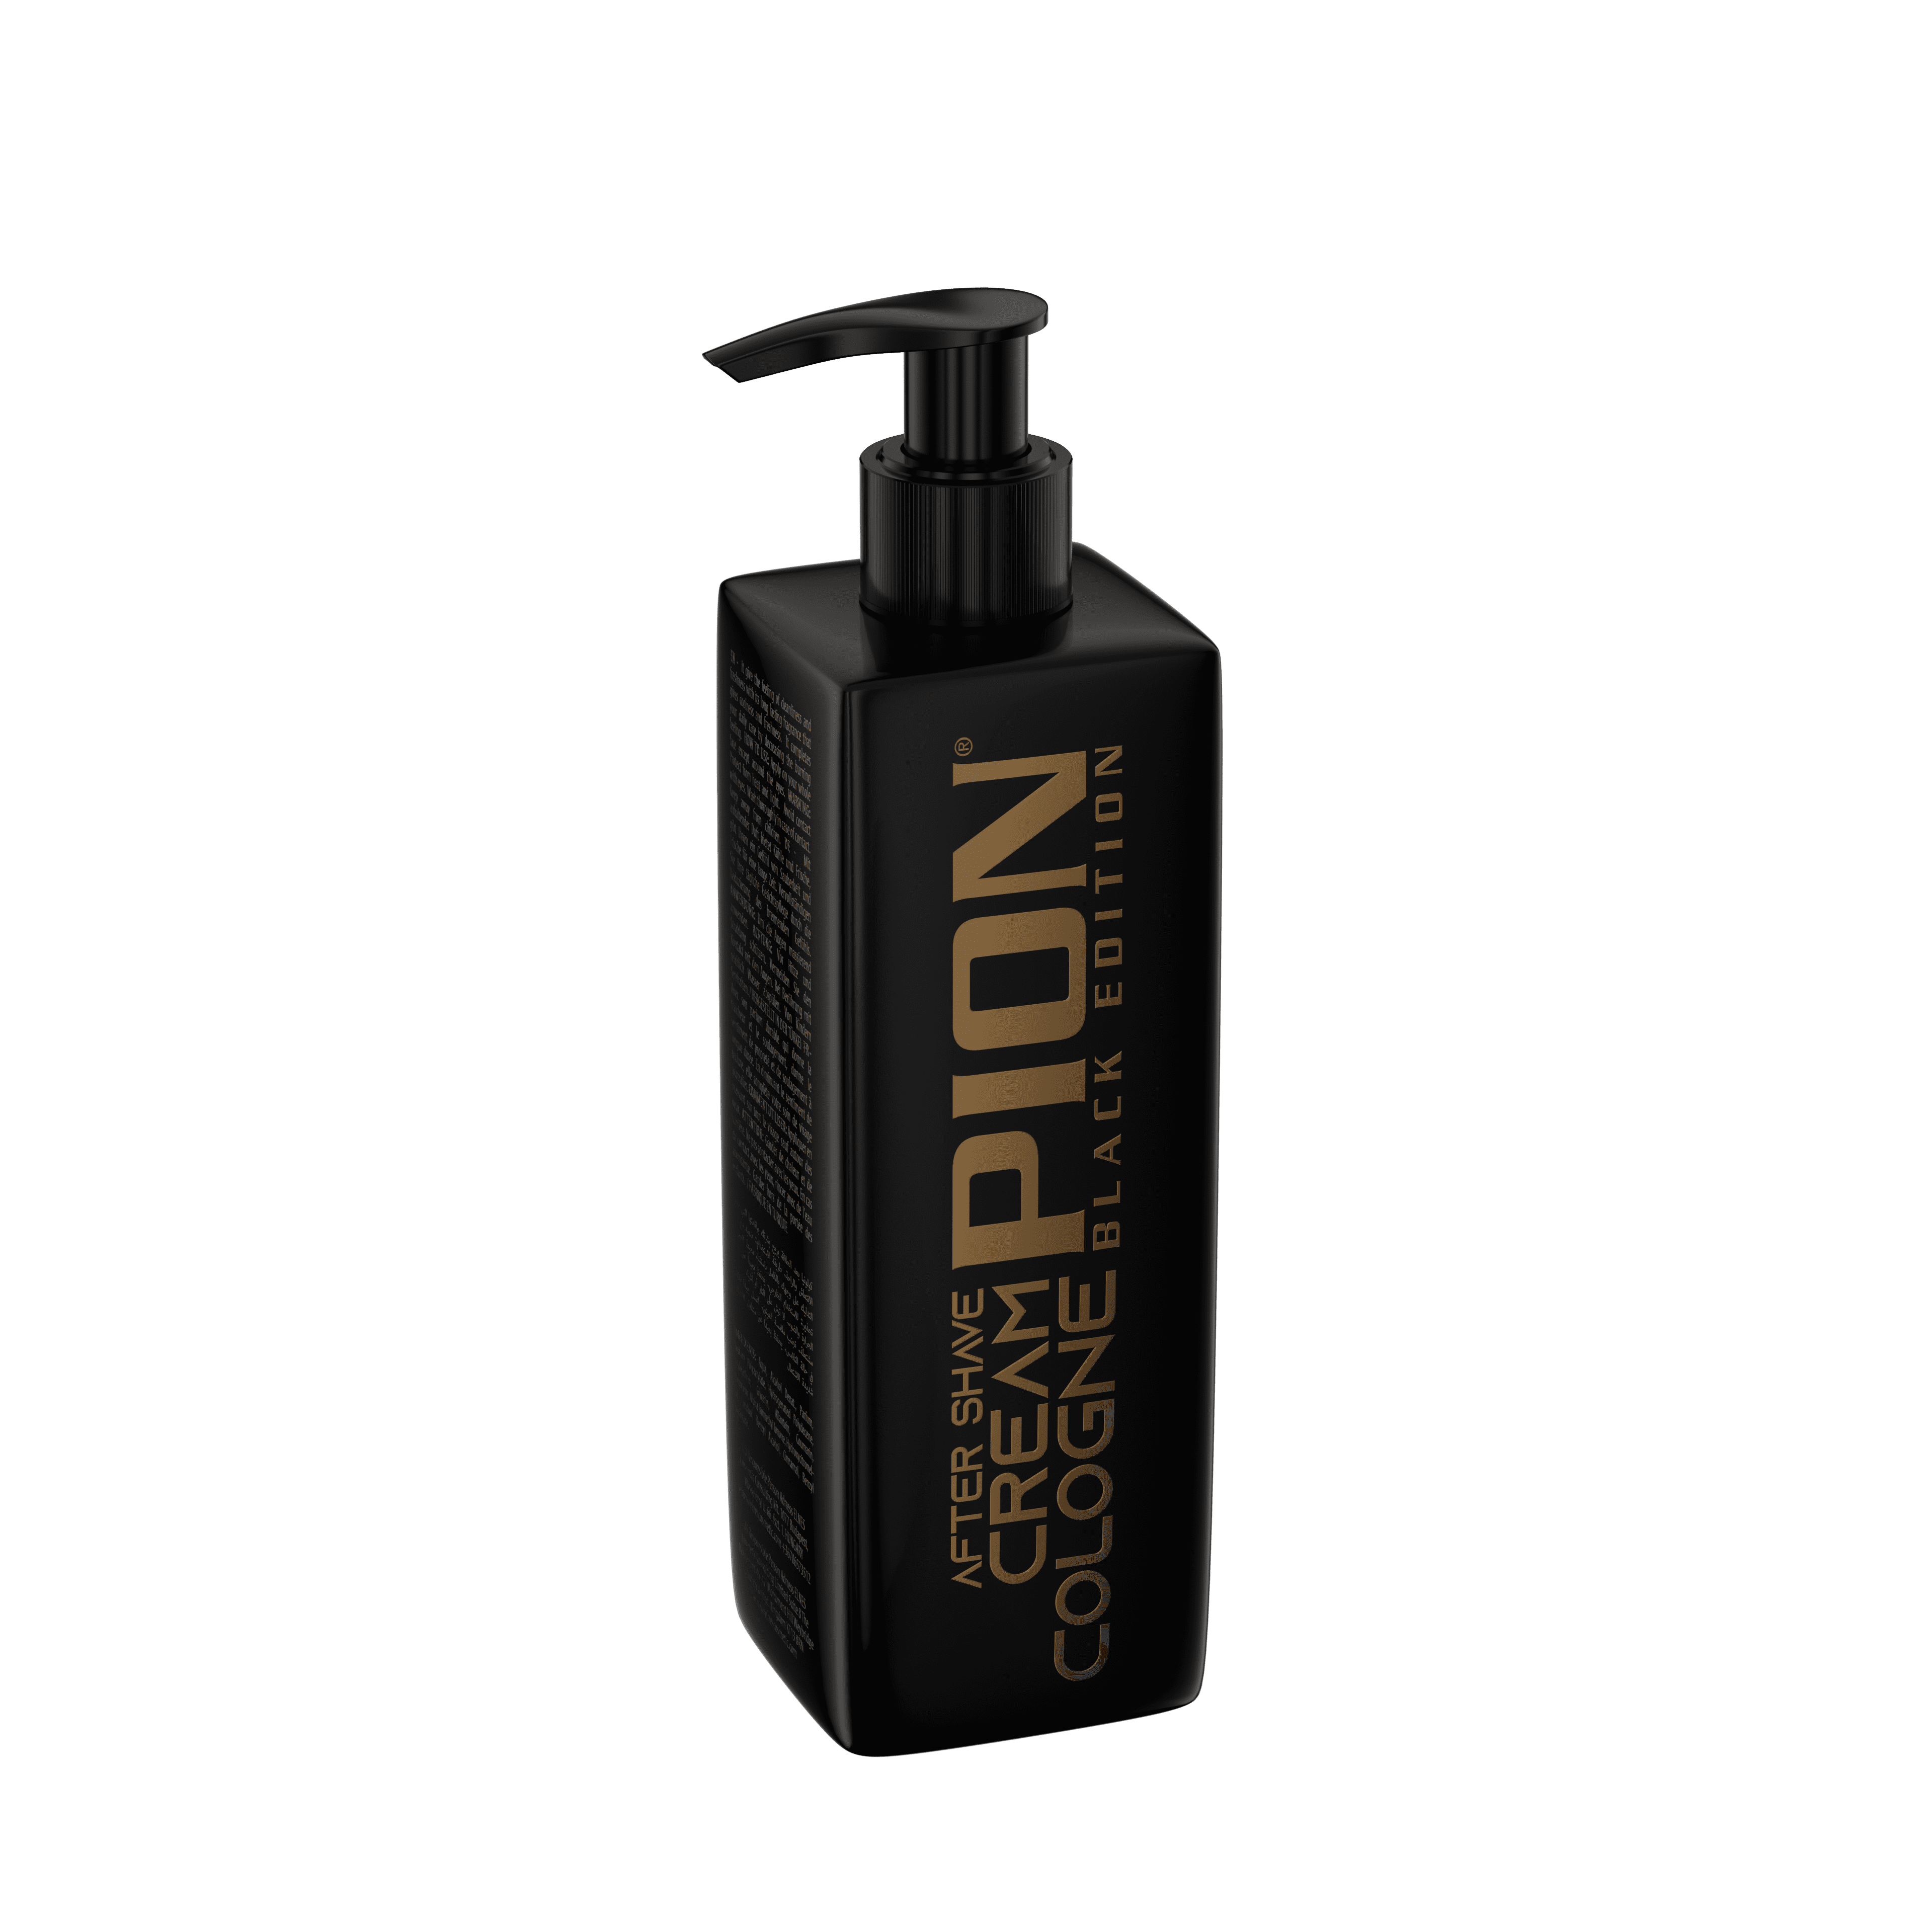 Pion Cream Cologne Golden 370 - PION BLACK EDITION